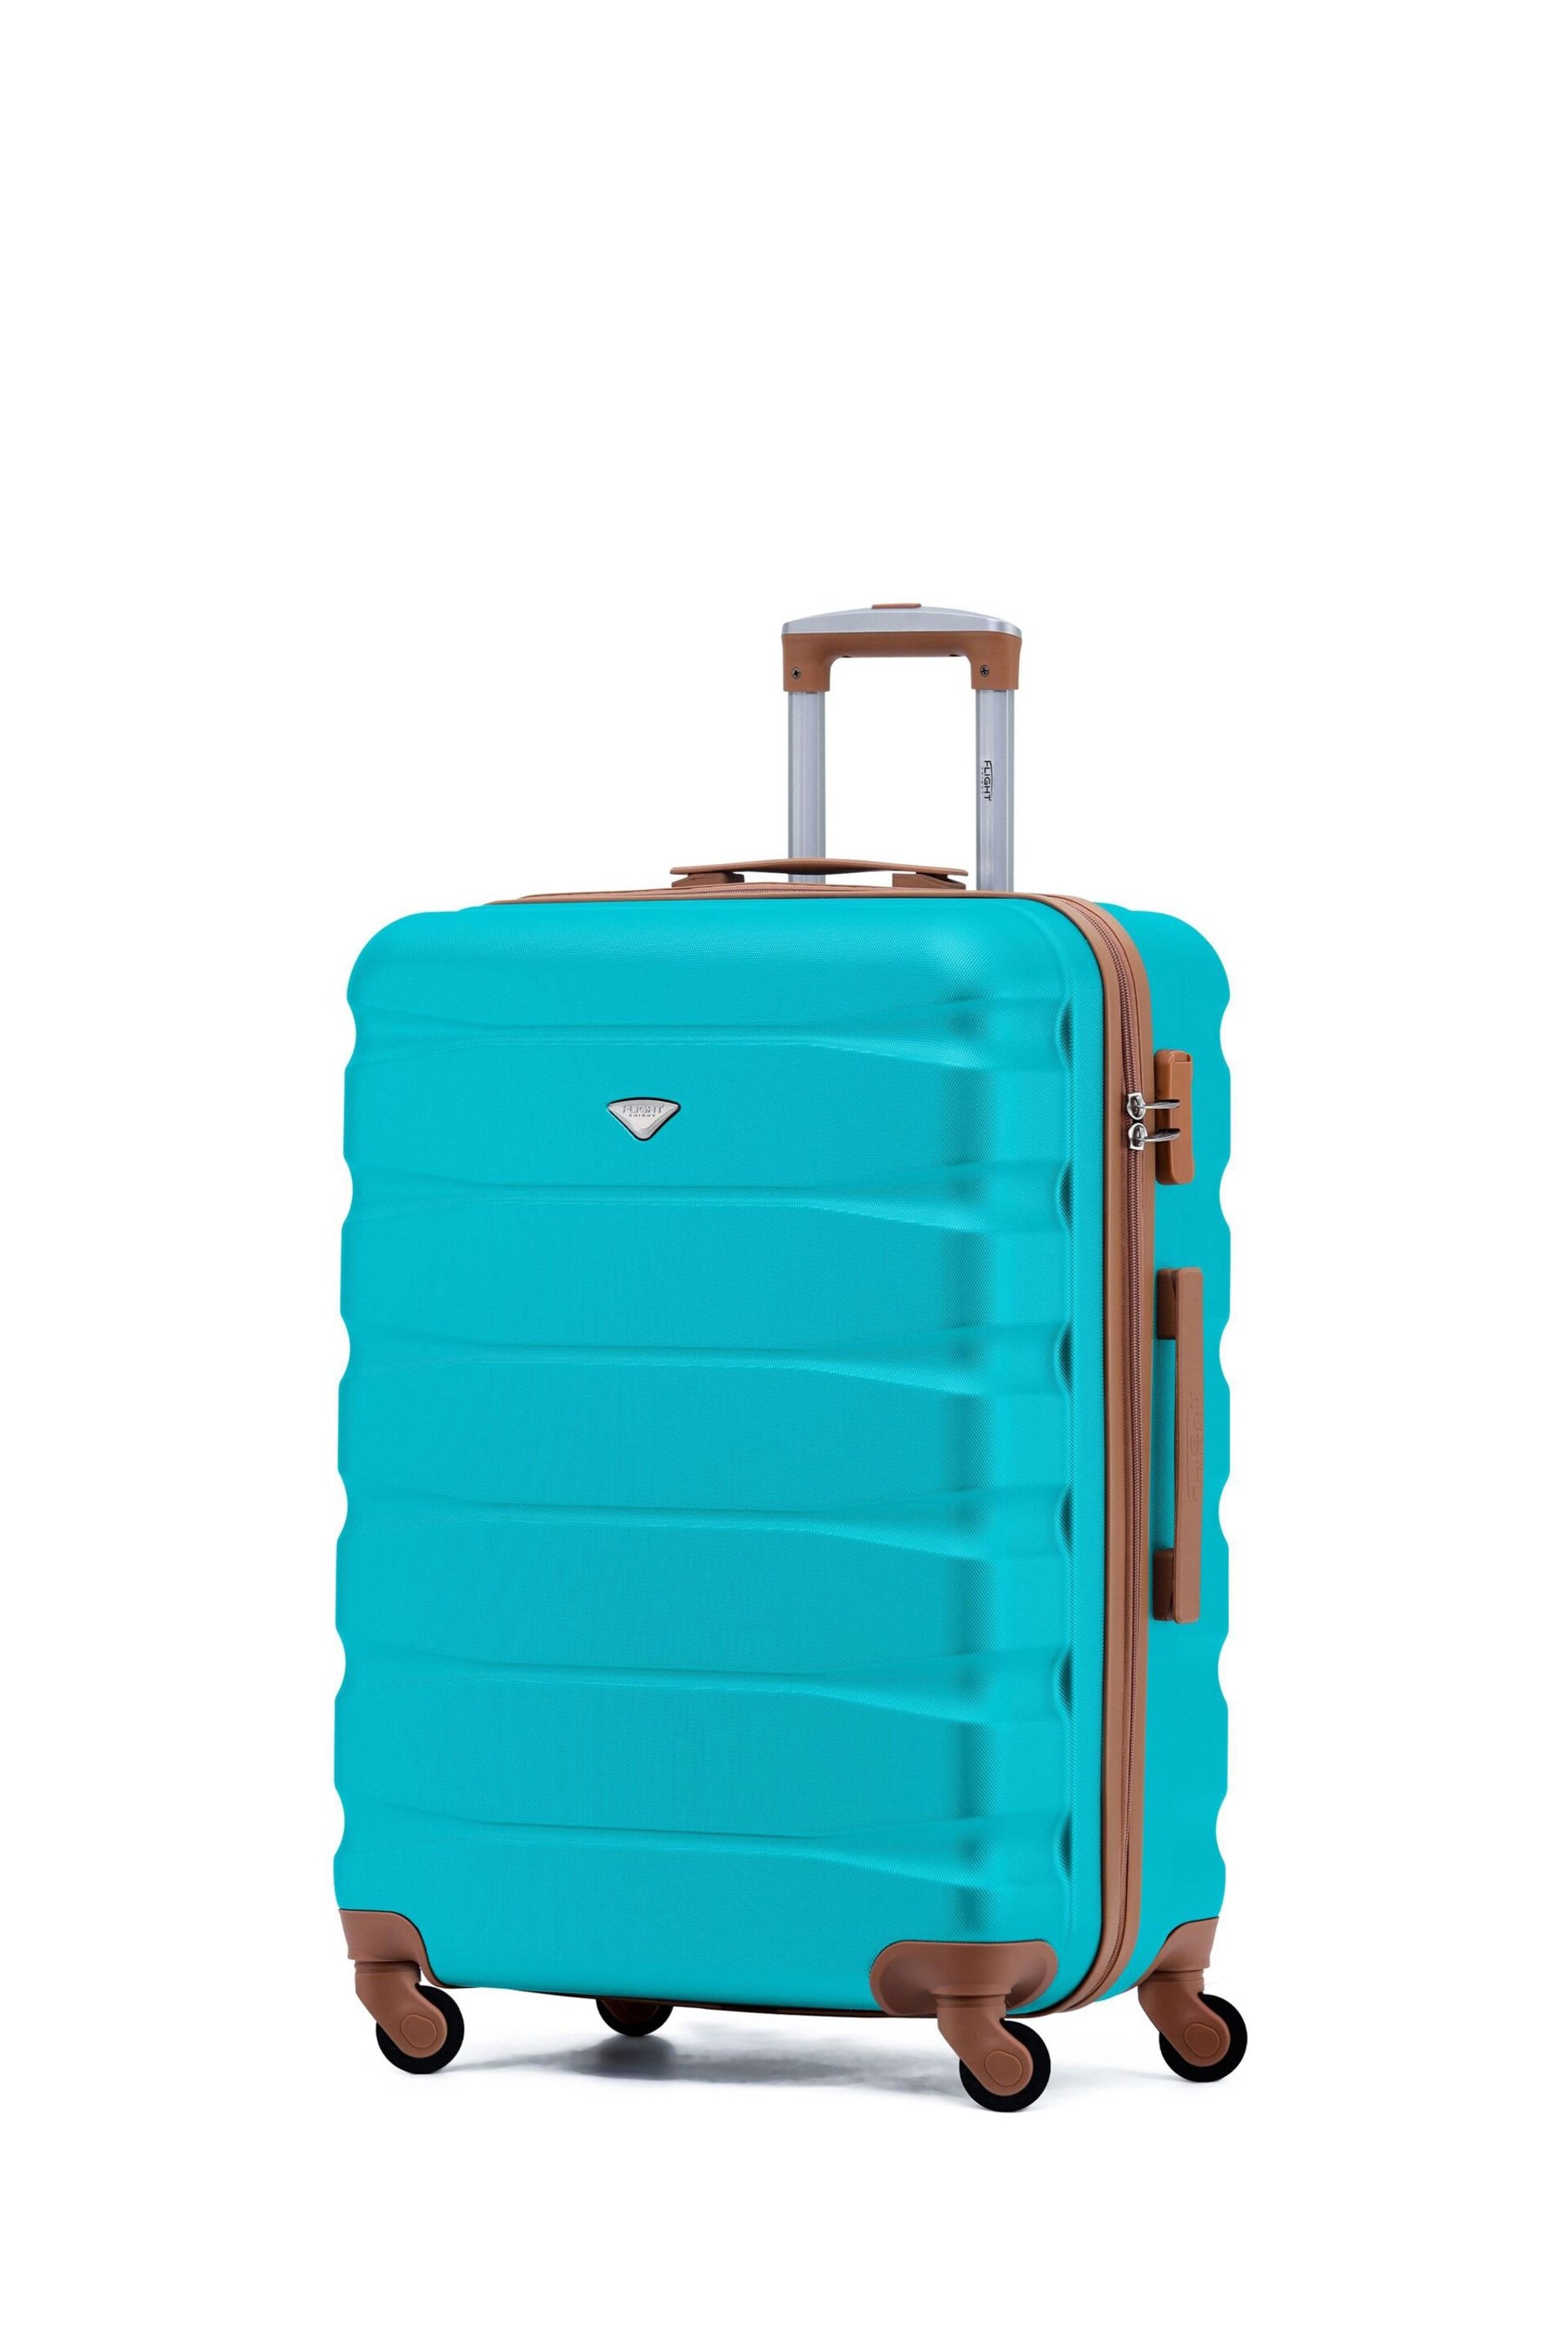 Flight Knight Aqua/Tan Medium Hardcase Lightweight Check In Suitcase With 4 Wheels - Image 1 of 8